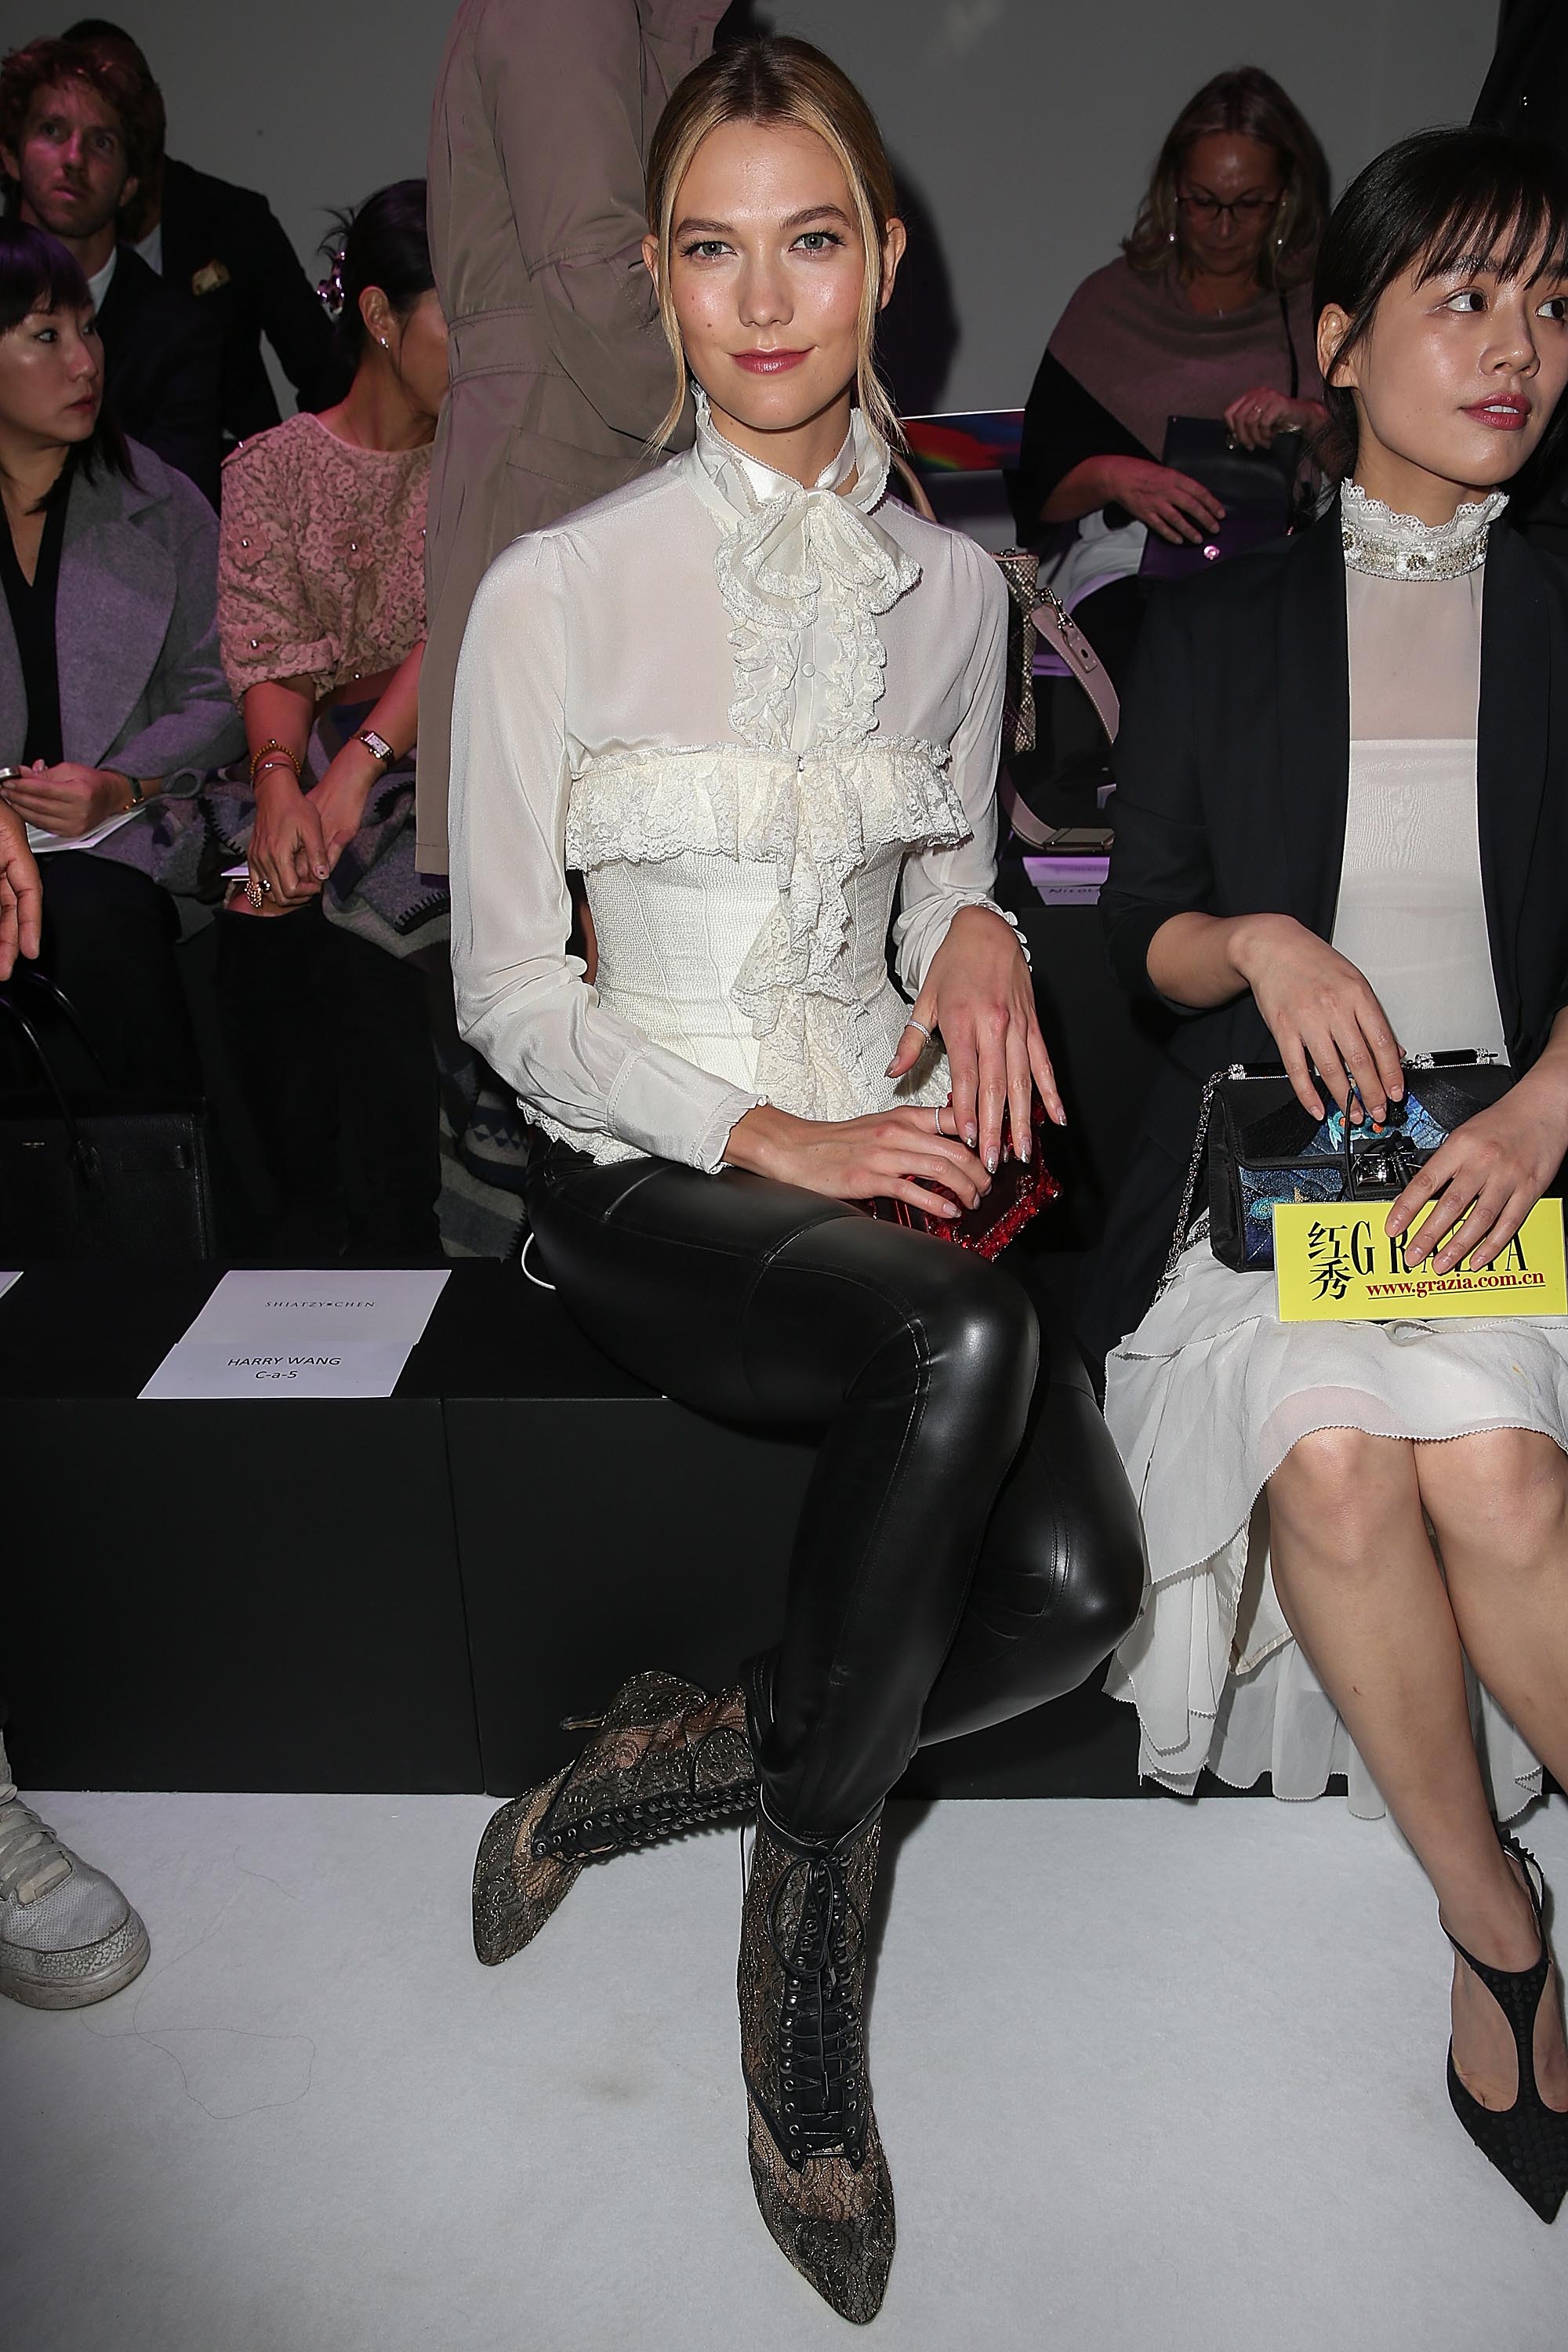 Karlie Kloss attends the Shiatzy Chen show